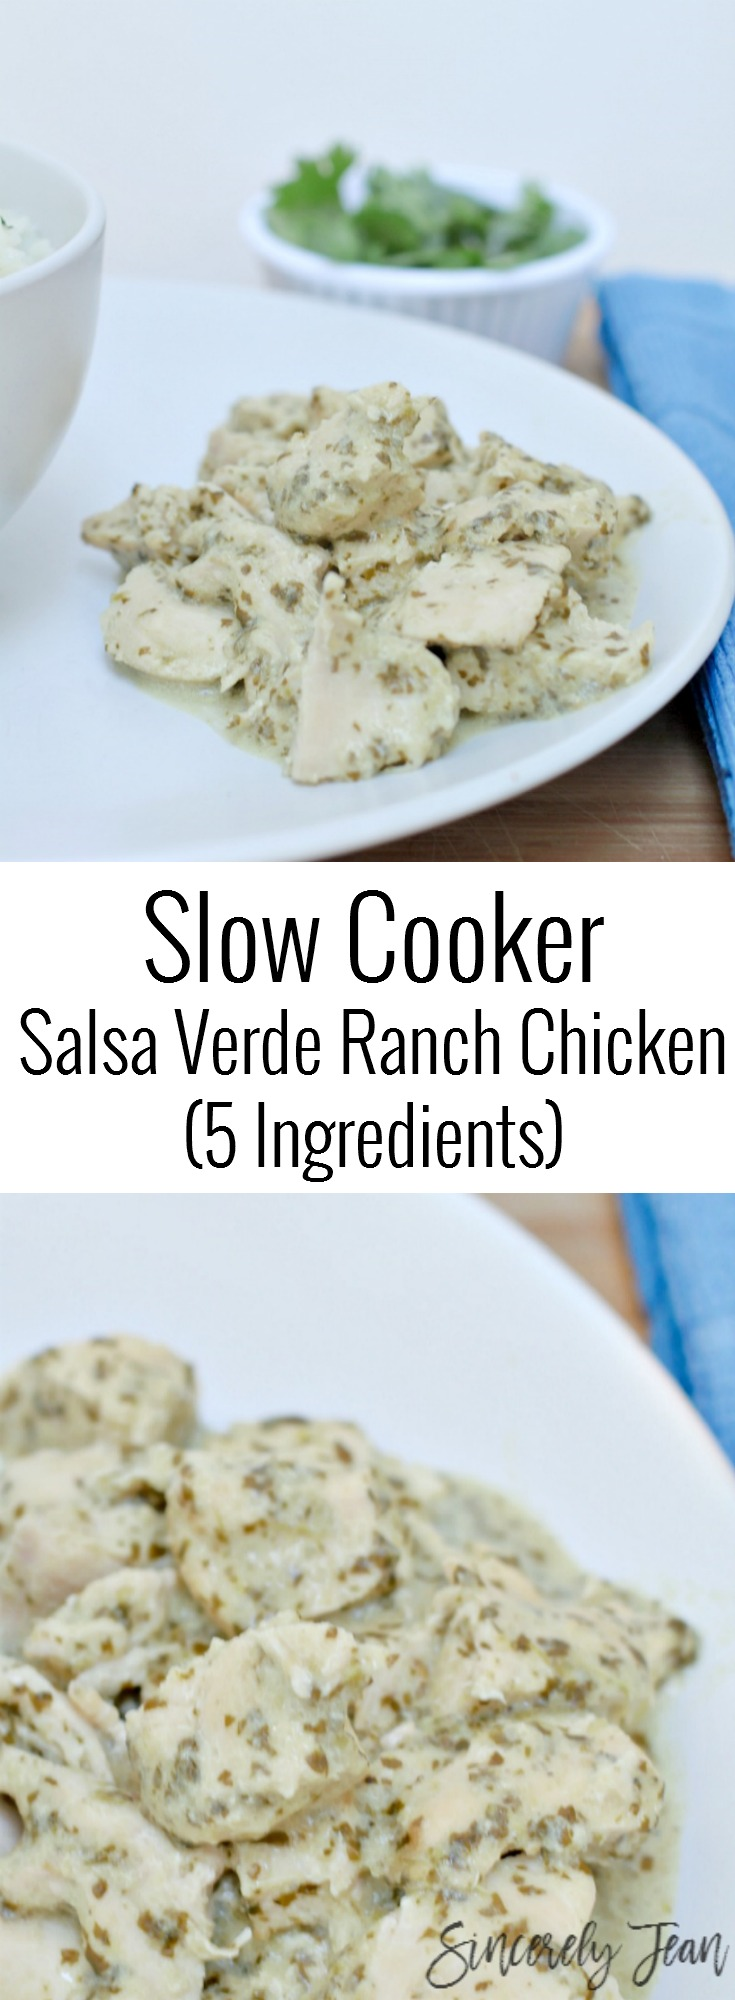 5 Ingredient Slow Cooker Salsa Verde Chicken - Quick and easy dinner recipe! | www.SincerelyJean.com